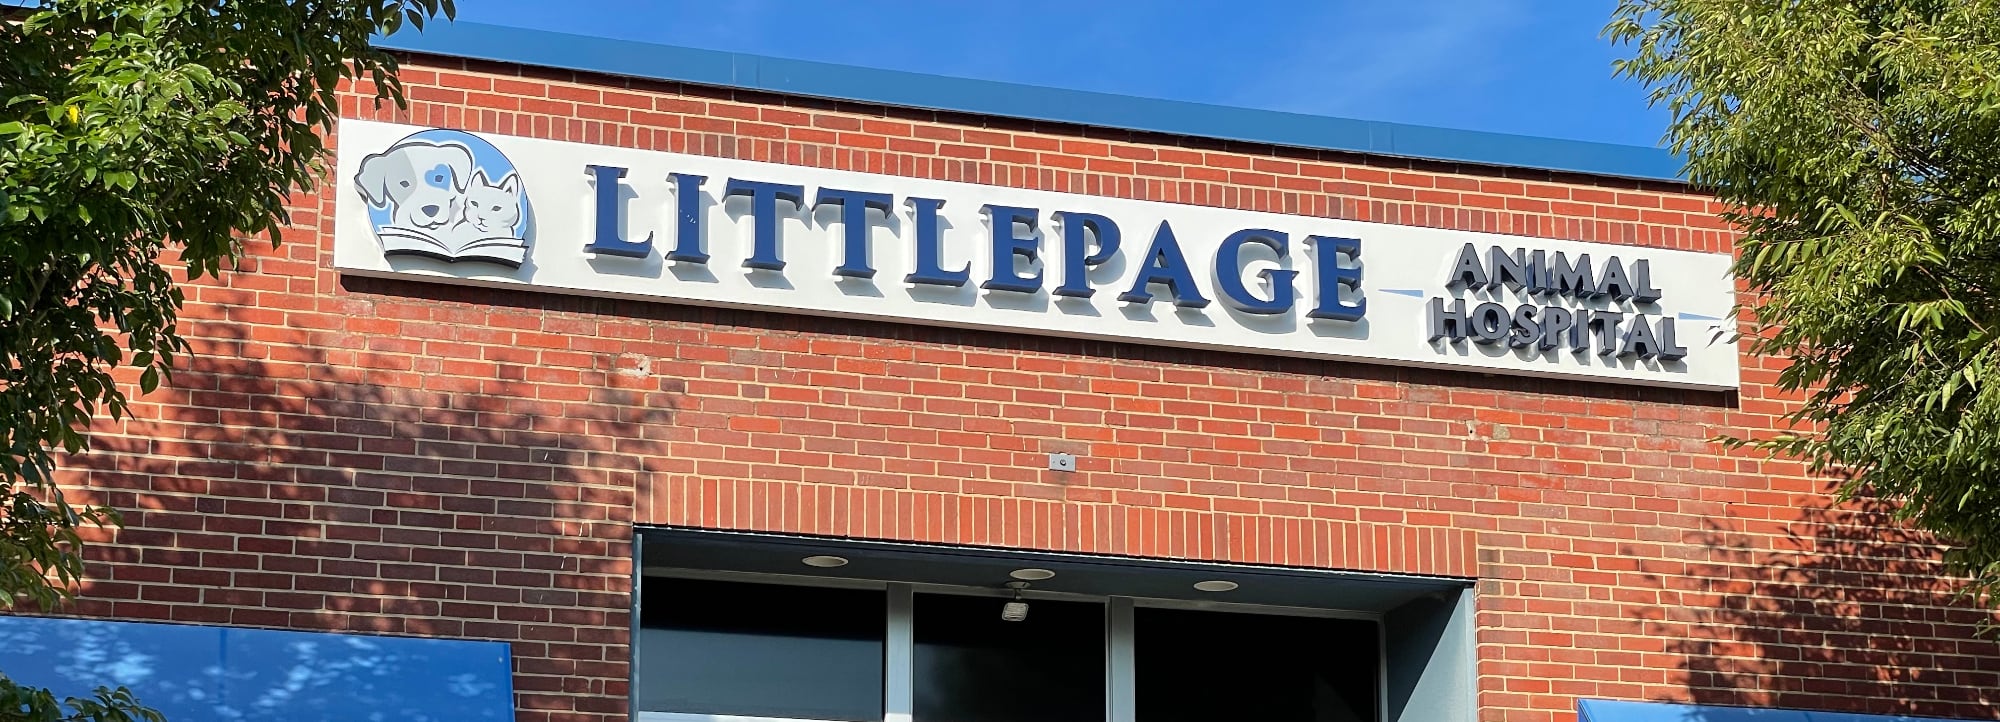 The Littlepage Animal Hospital building